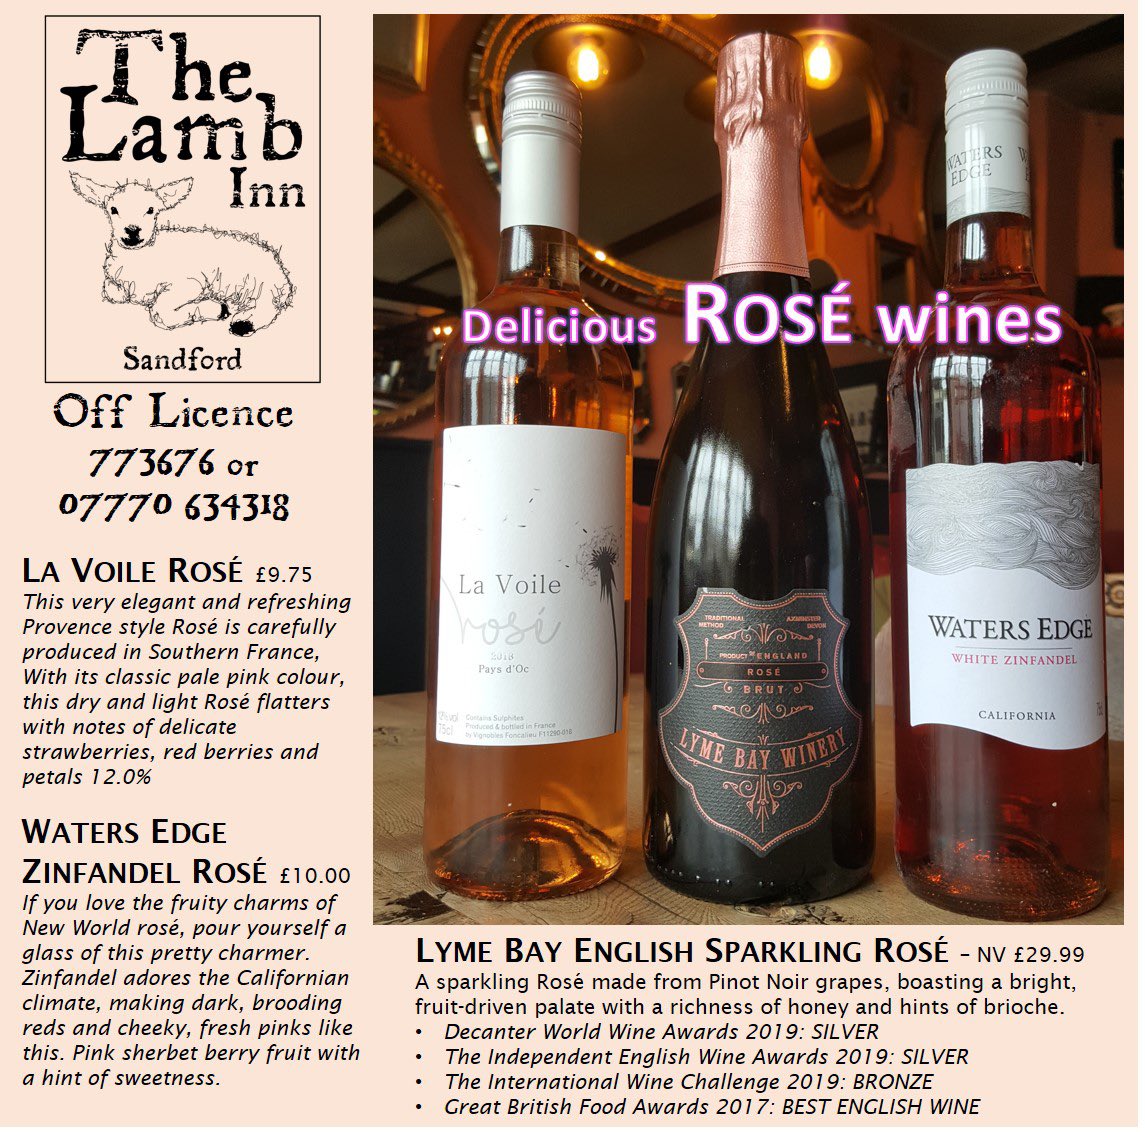 Rosé wine 🌹  #rosewine  #lambinnofflicence #deliciouswine #staysafe